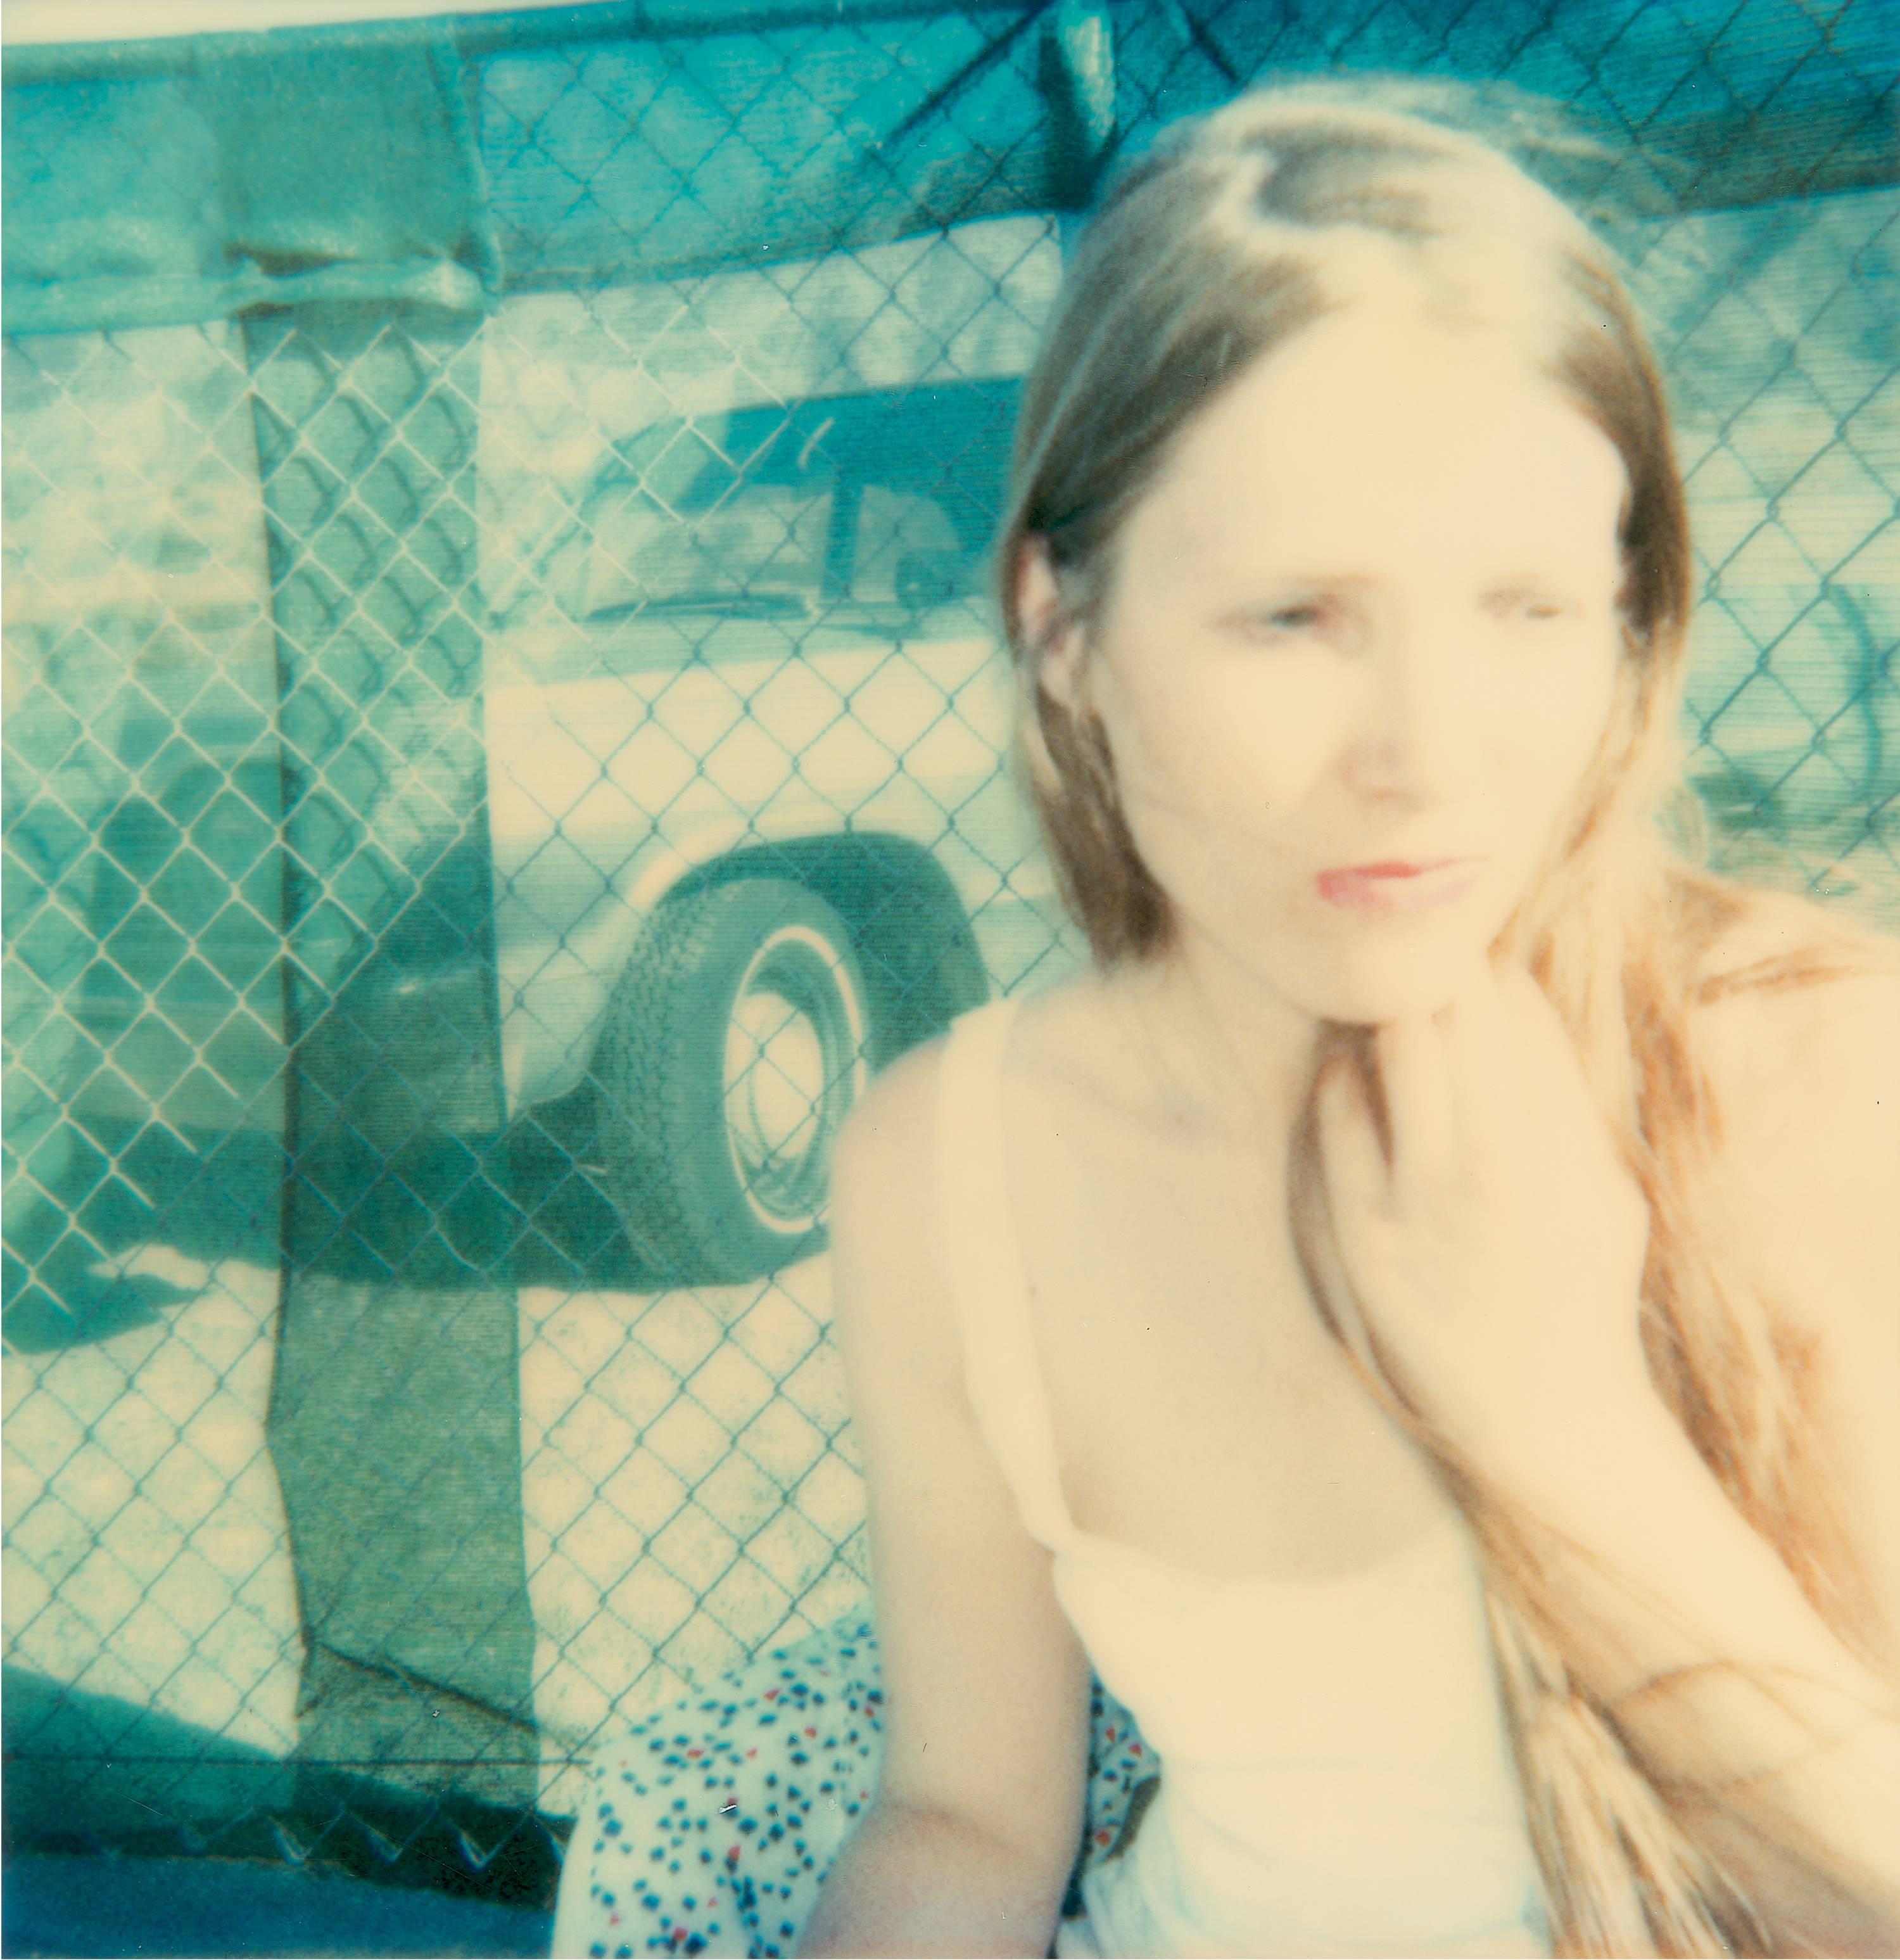 Stefanie Schneider Portrait Photograph - 29 Day Dreams (29 Palms, CA) - Analog, Polaroid, 20th Century, Contemporary